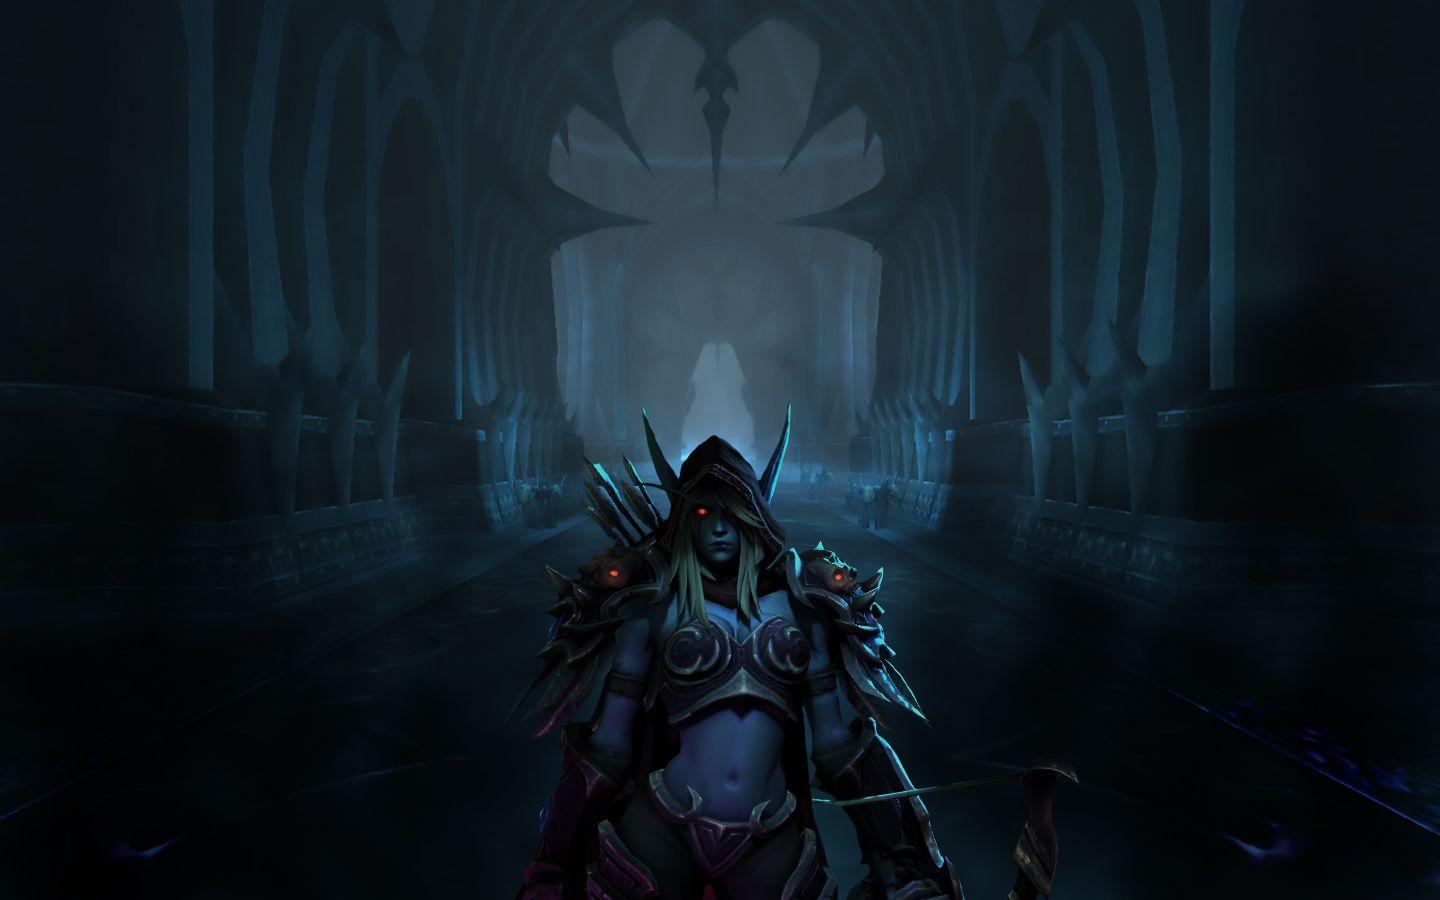 alone in the dark illumination gameplay download free